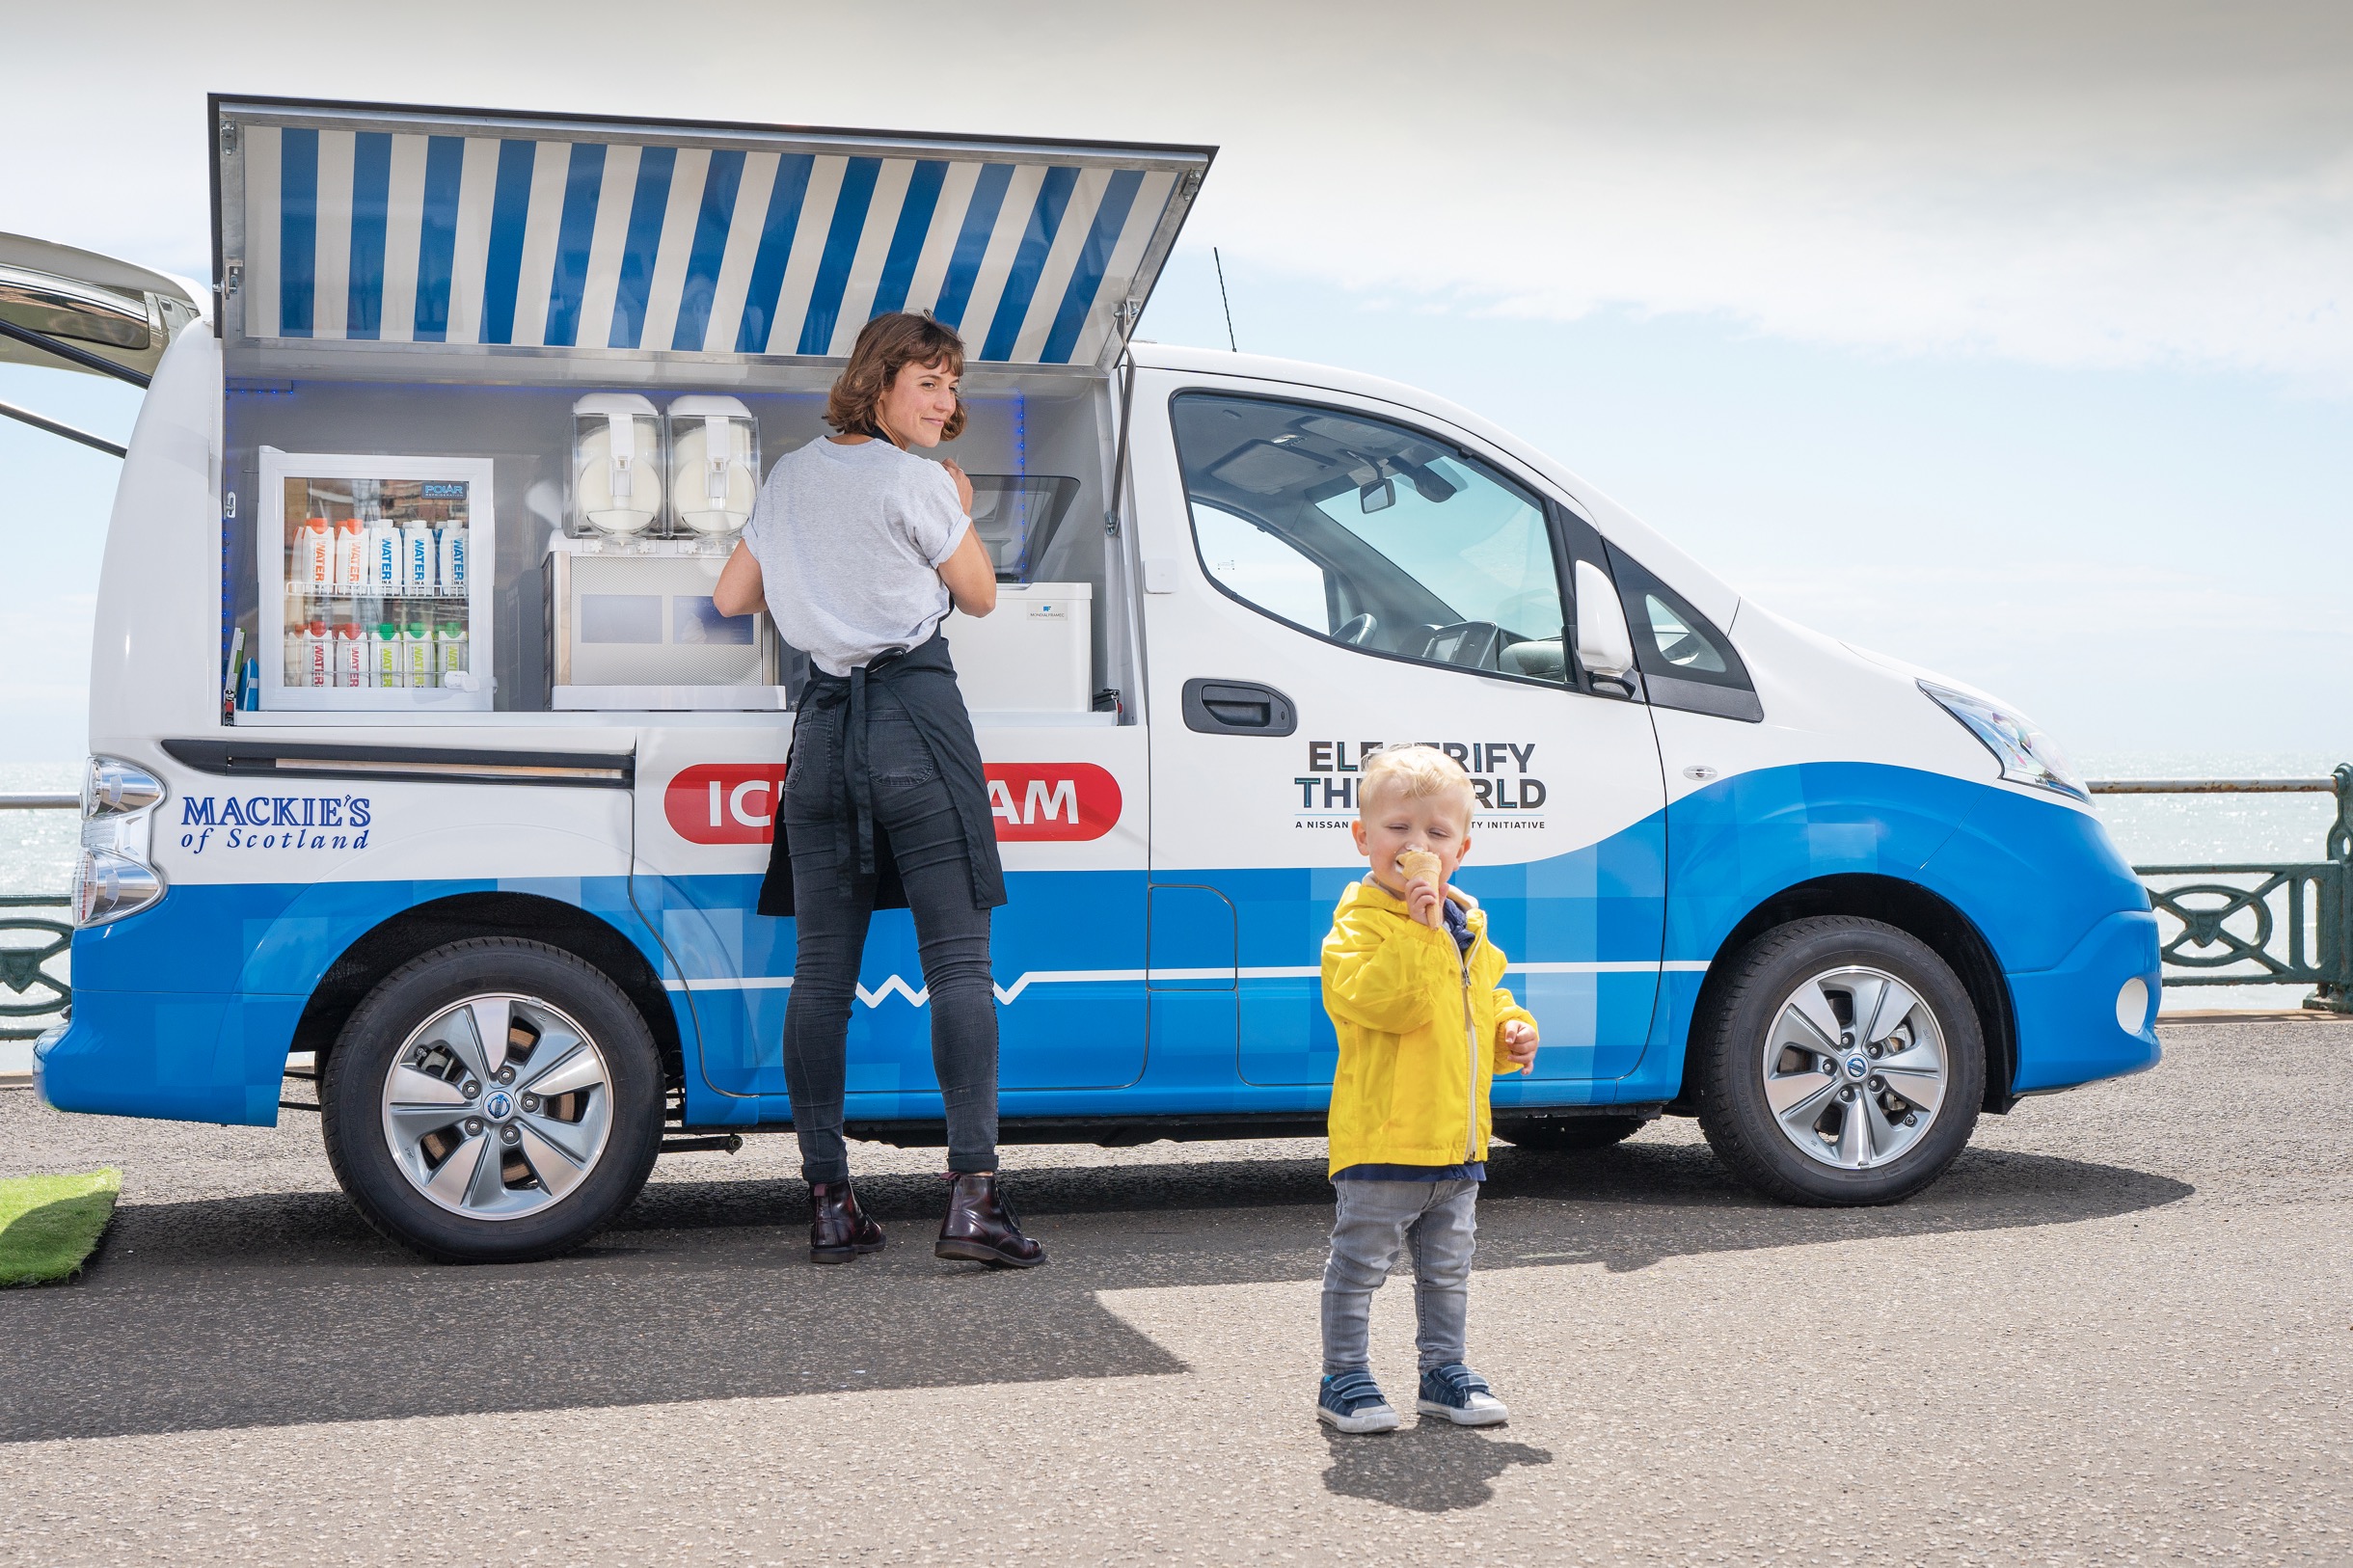 Nissan S Zero Emission Ice Cream Van Uses Old Ev Batteries To Keep